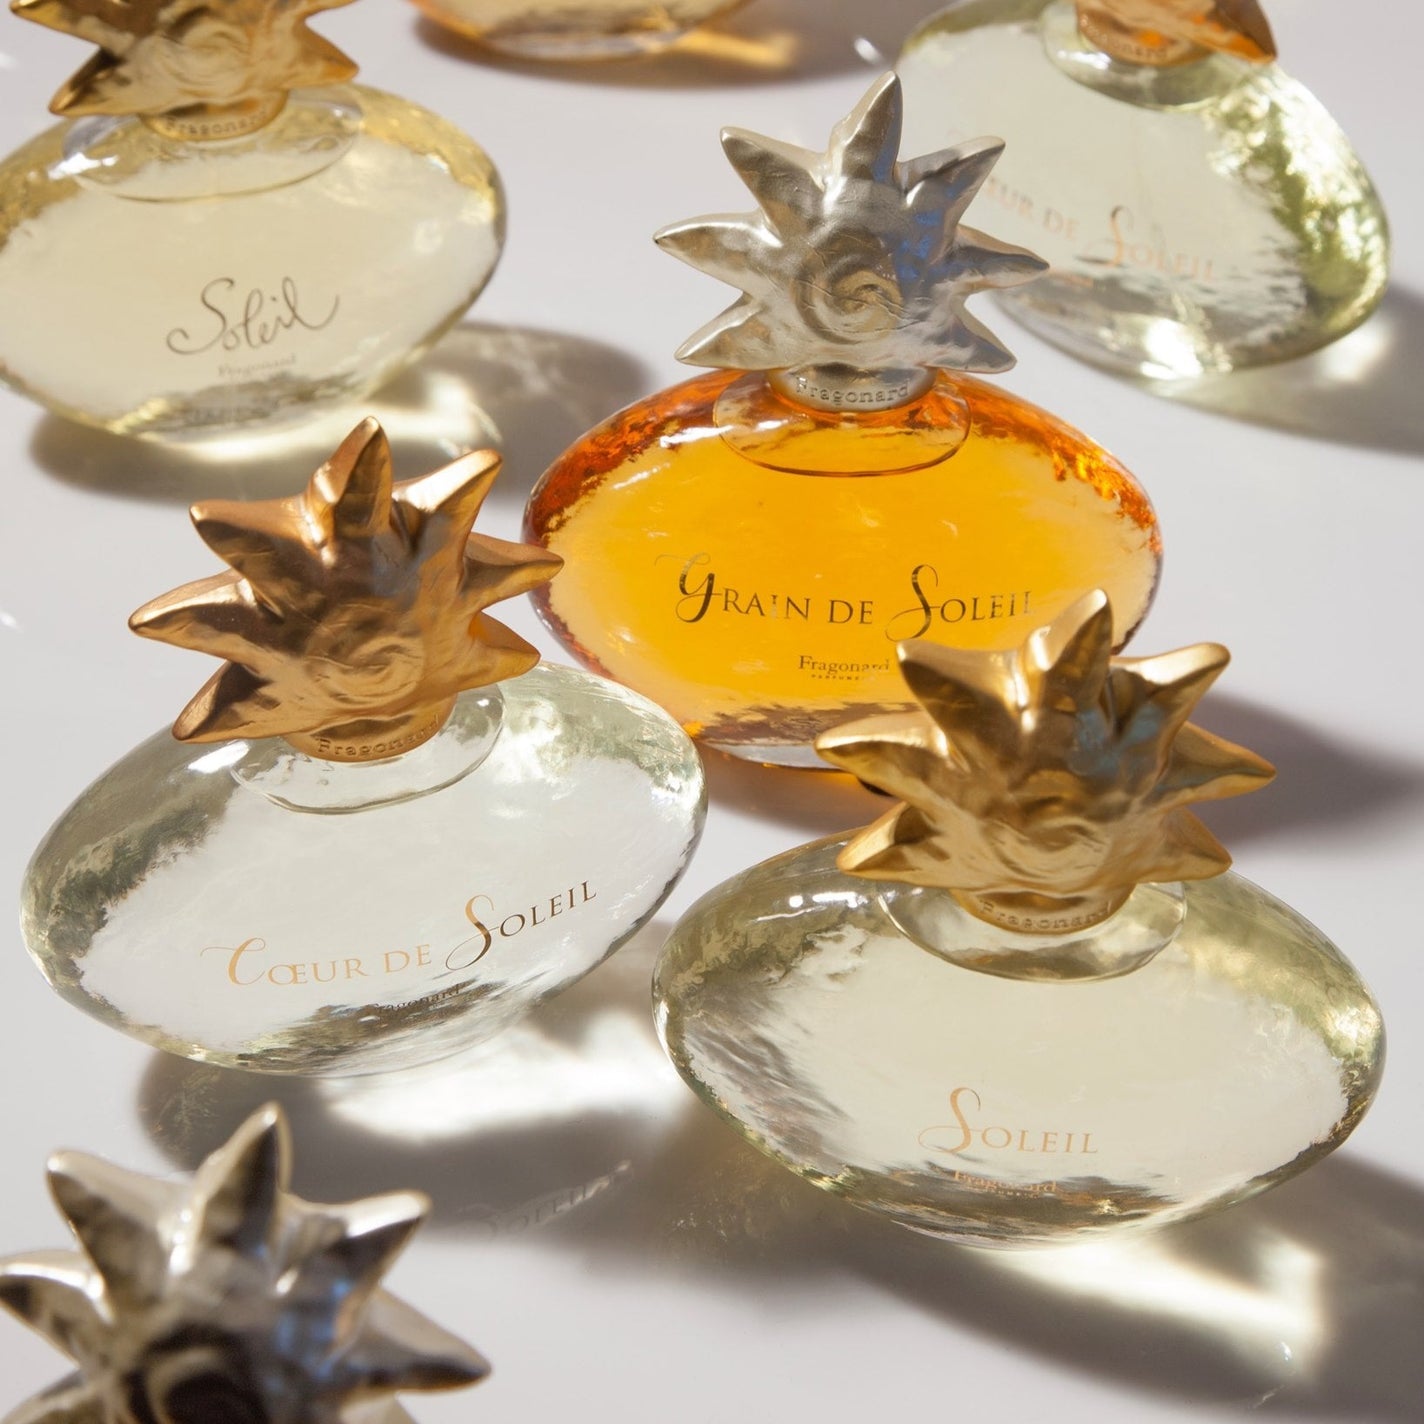 Sample Vial - Fragonard Coeur de Soleil Eau de Parfum